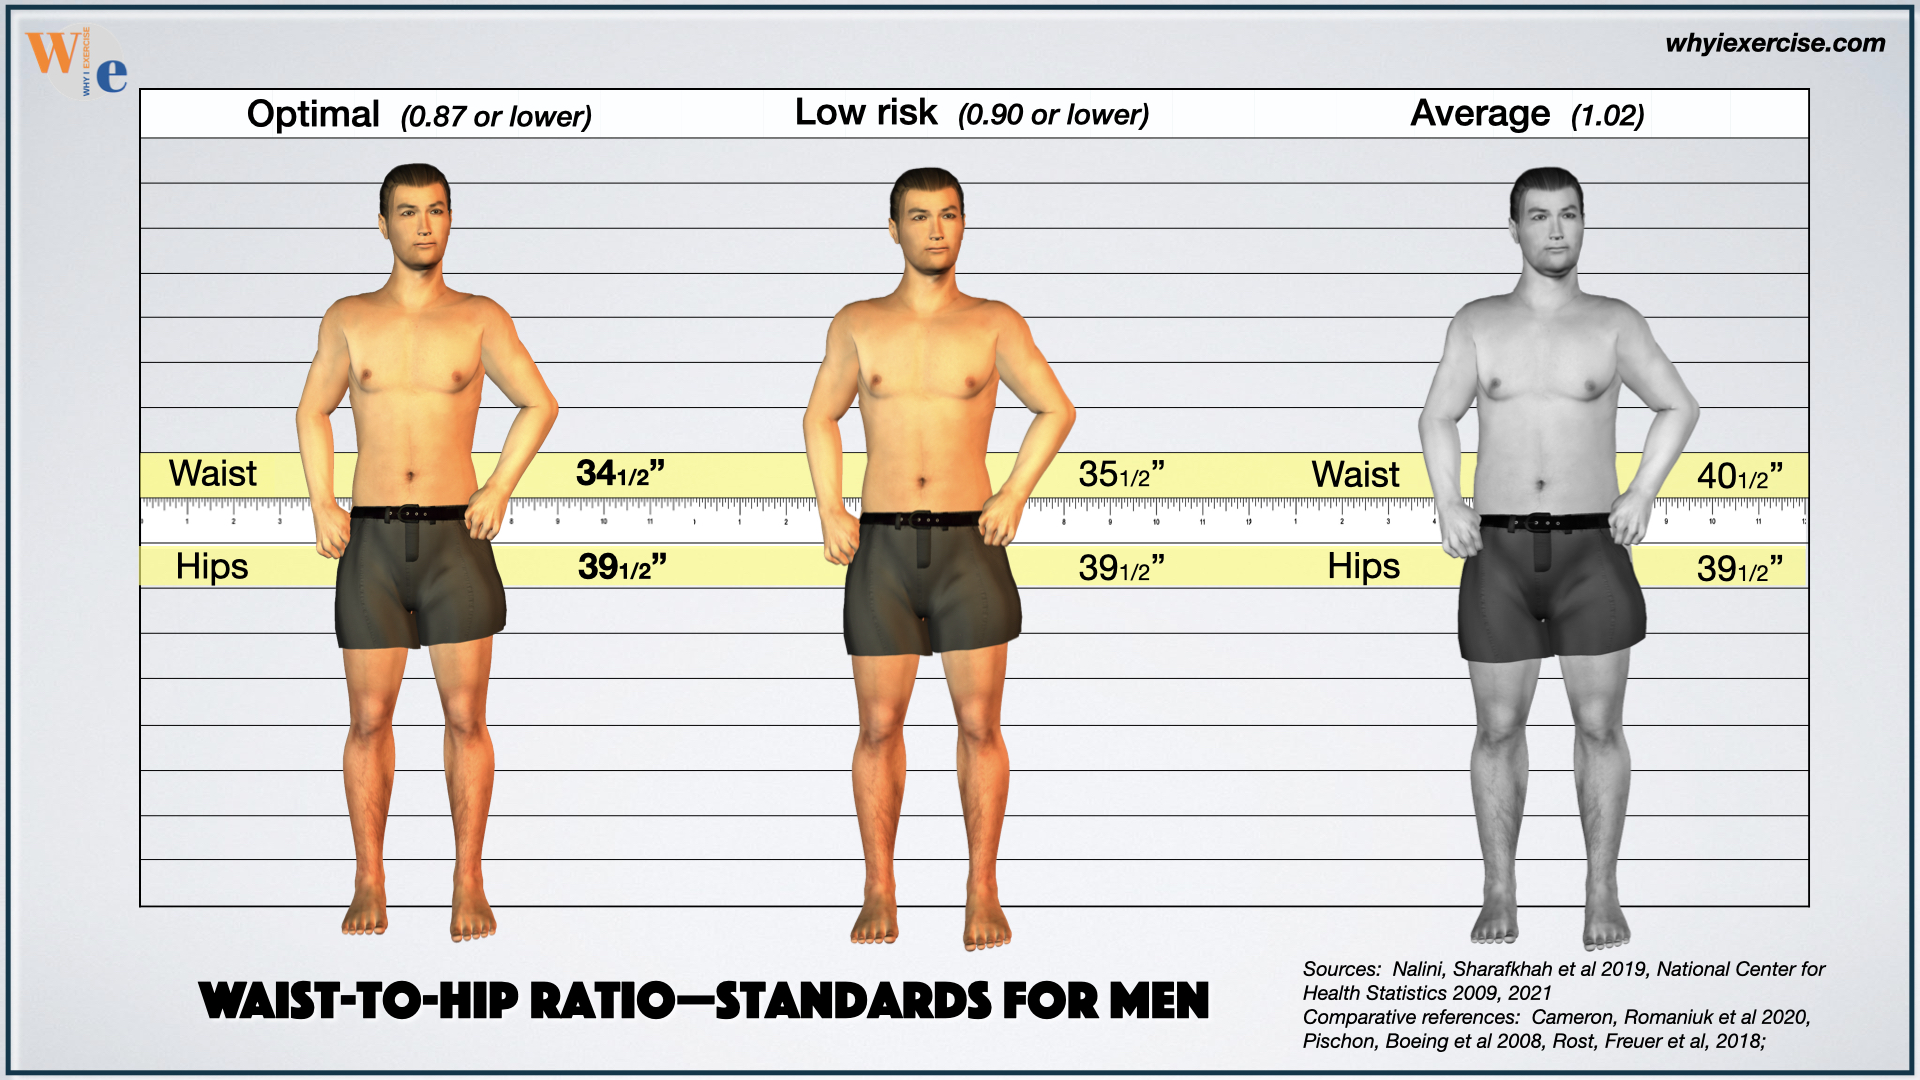 https://www.whyiexercise.com/images/waist.to.hip.ratio.standards.men.jpg